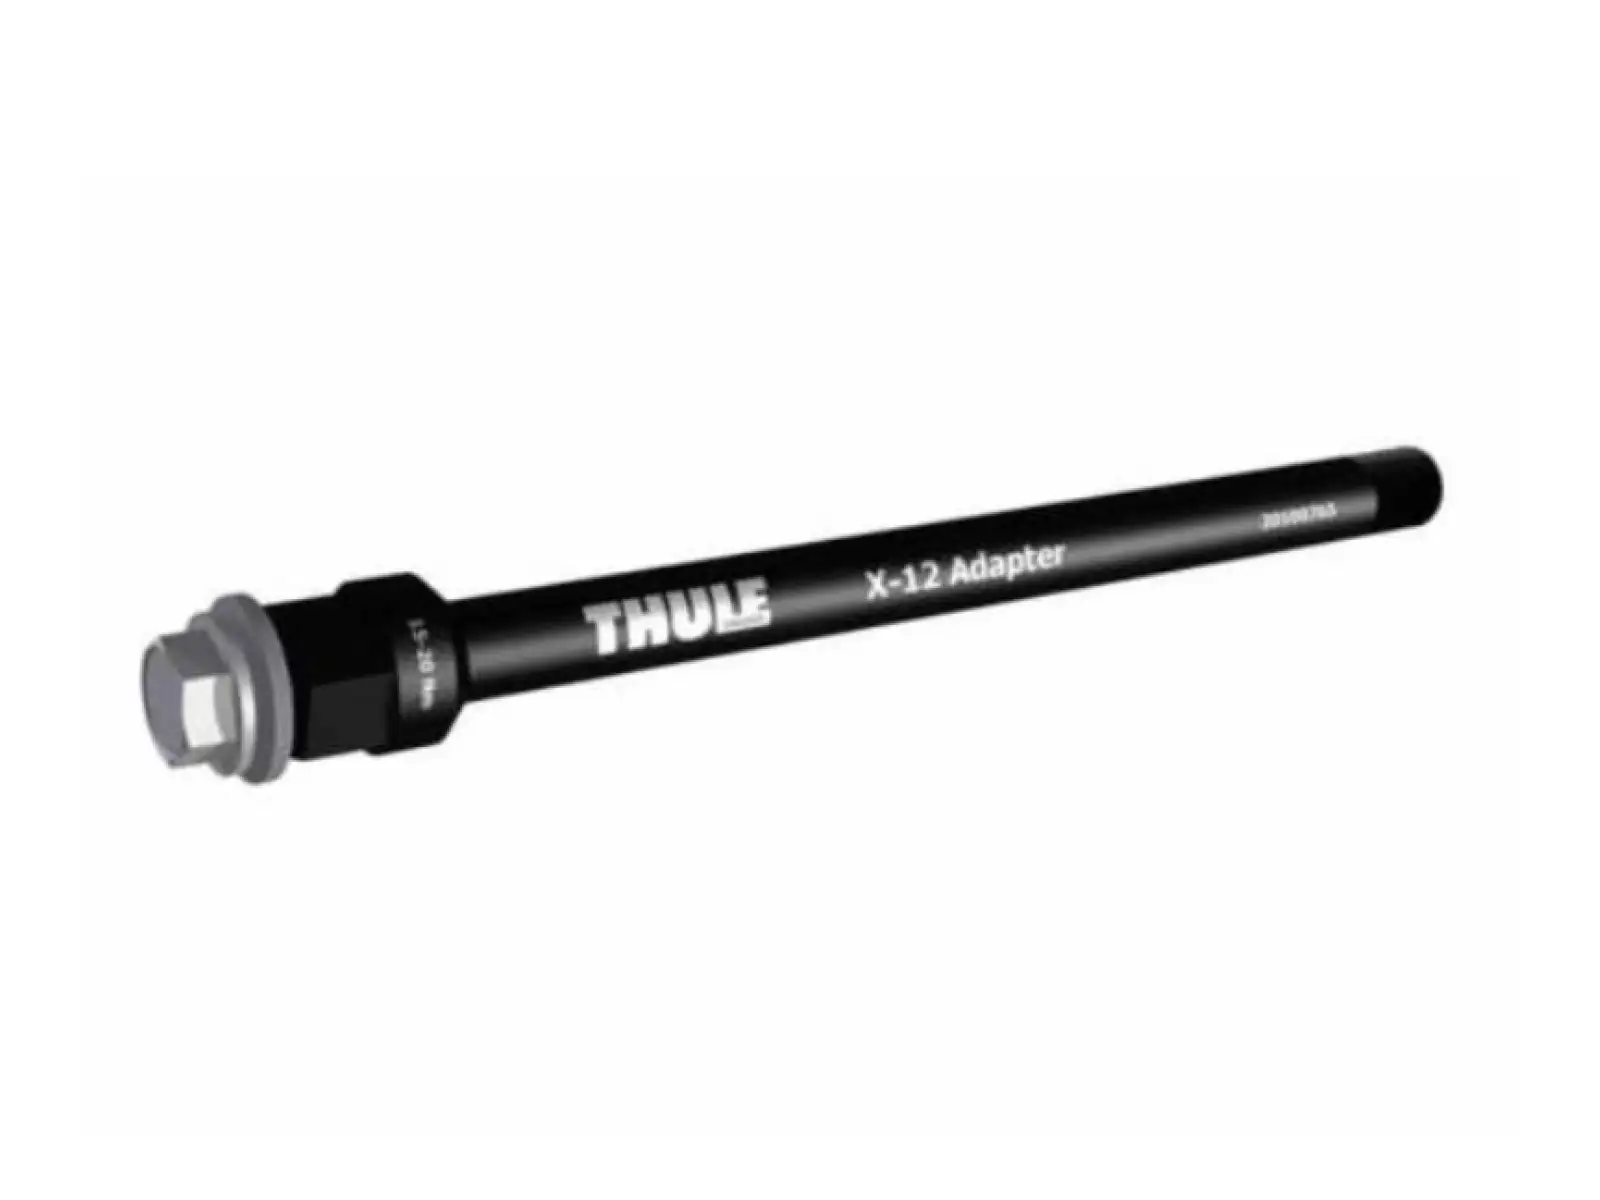 Thule adaptér závěsu pro pevné 12mm osy Syntace X-12 160 mm (M12x1.0)